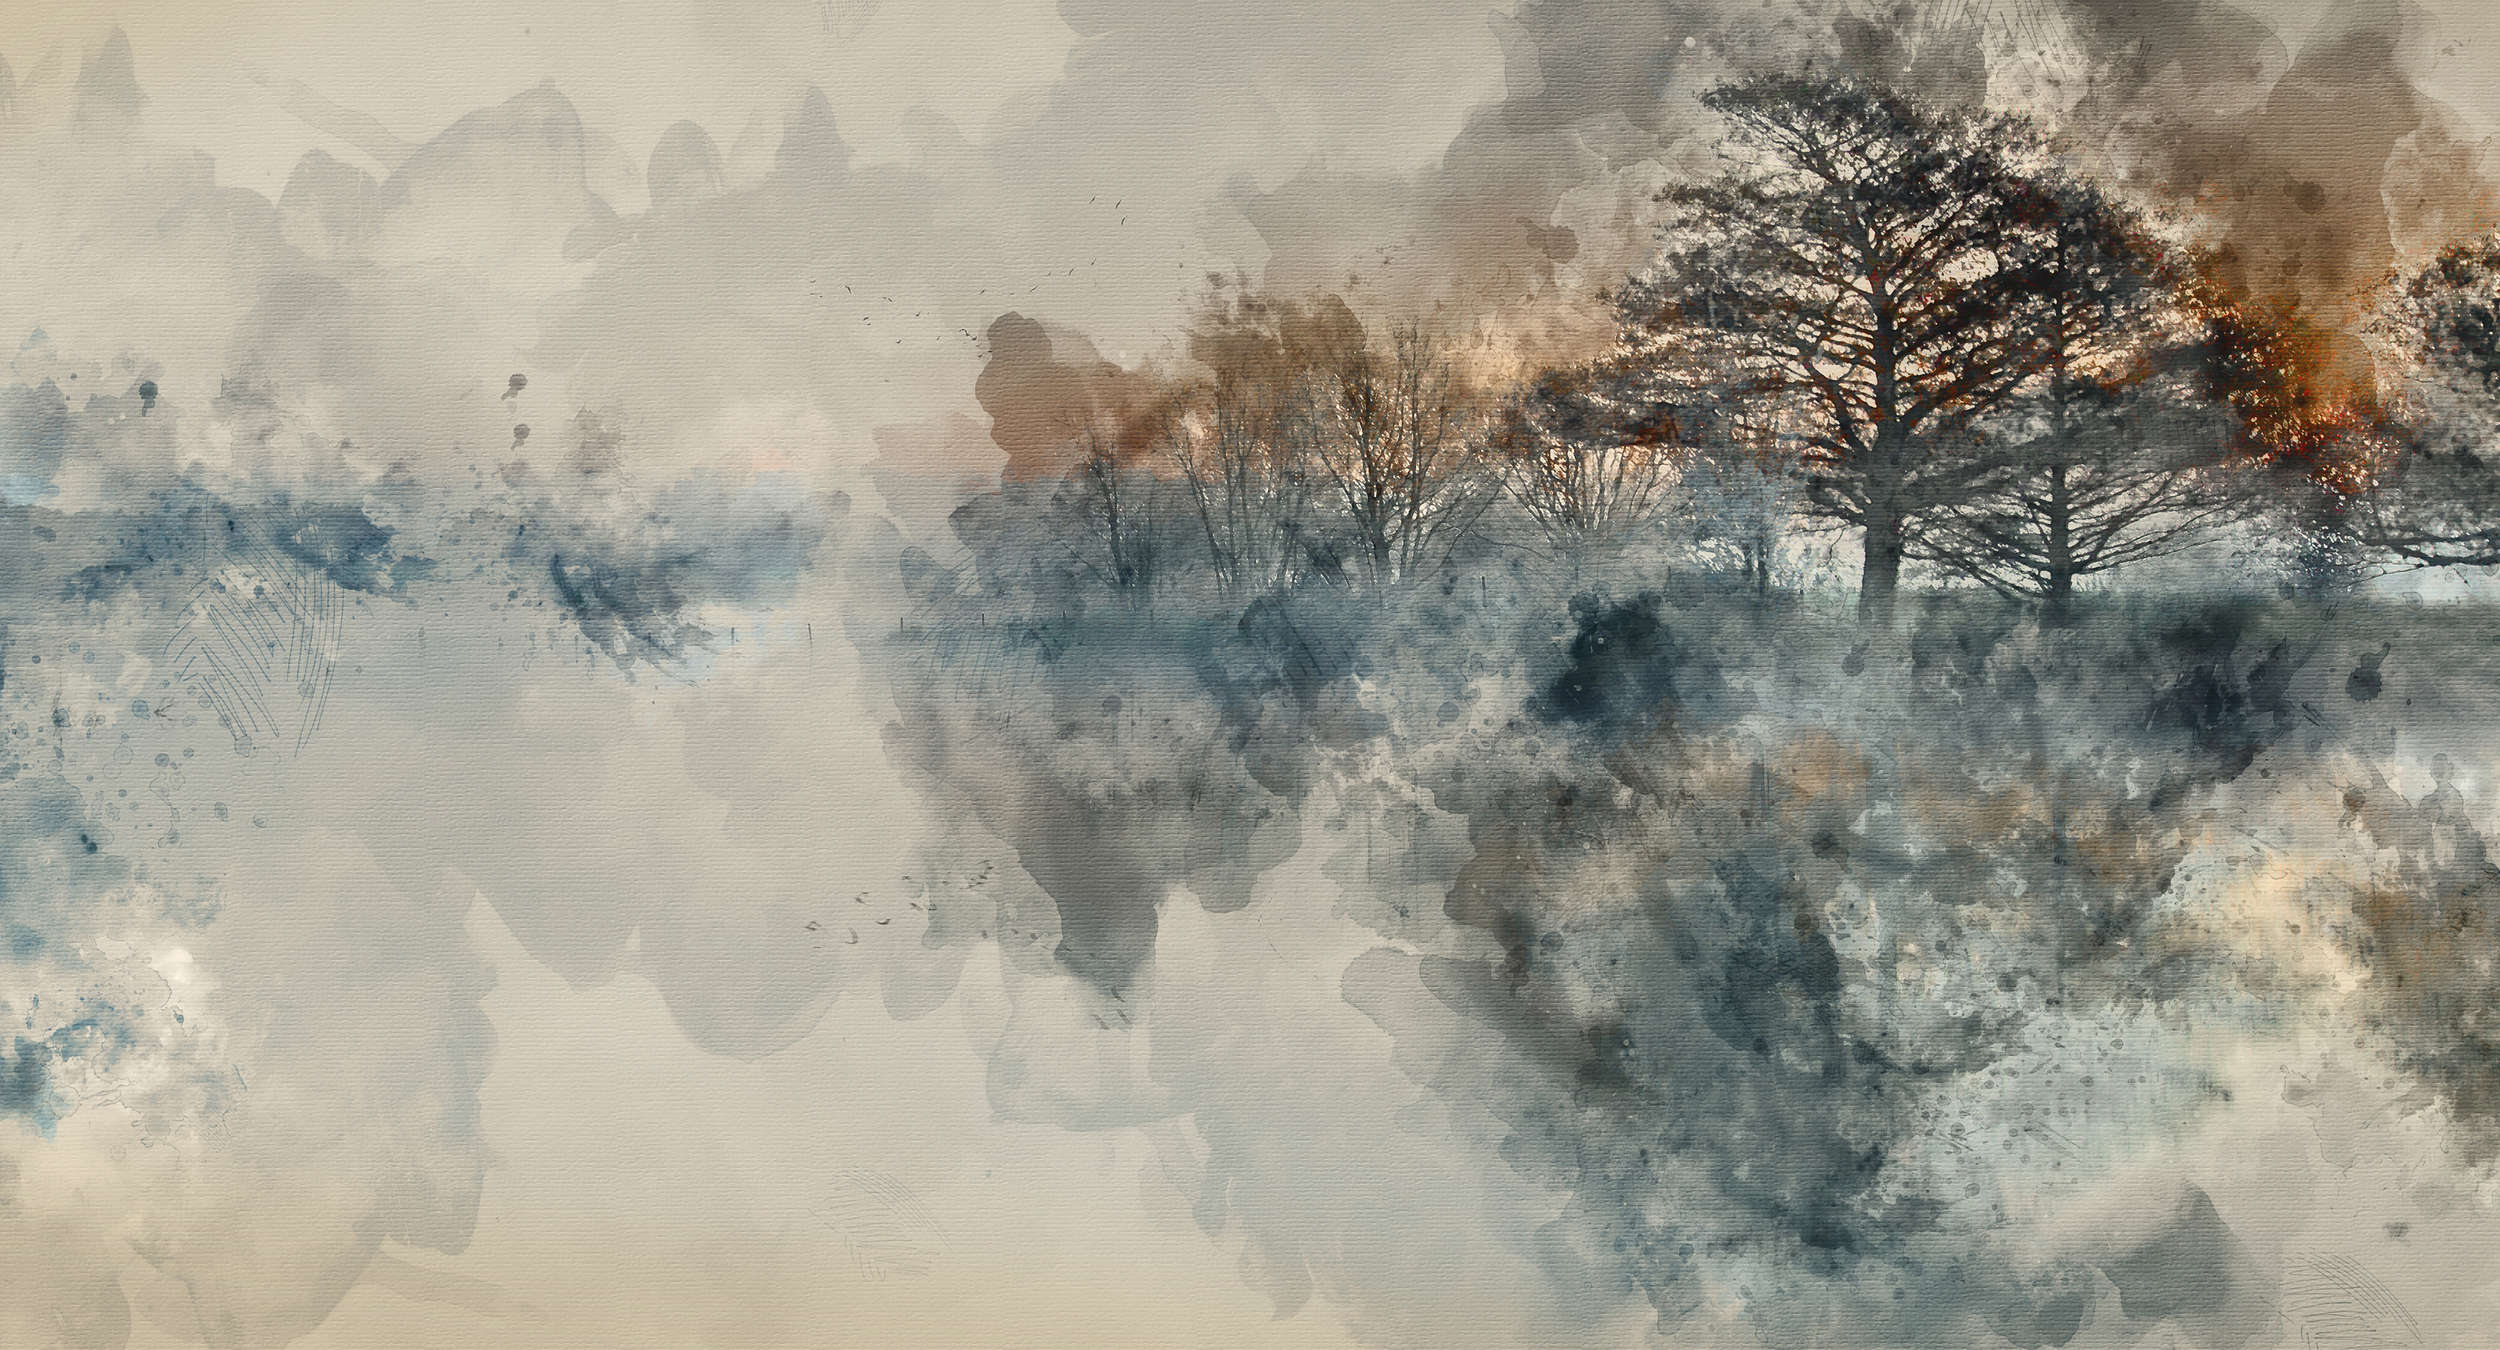             Fototapete Autumn Lake im Aquarellstil – Blau, Beige, Grau – Strukturiertes Vlies
        